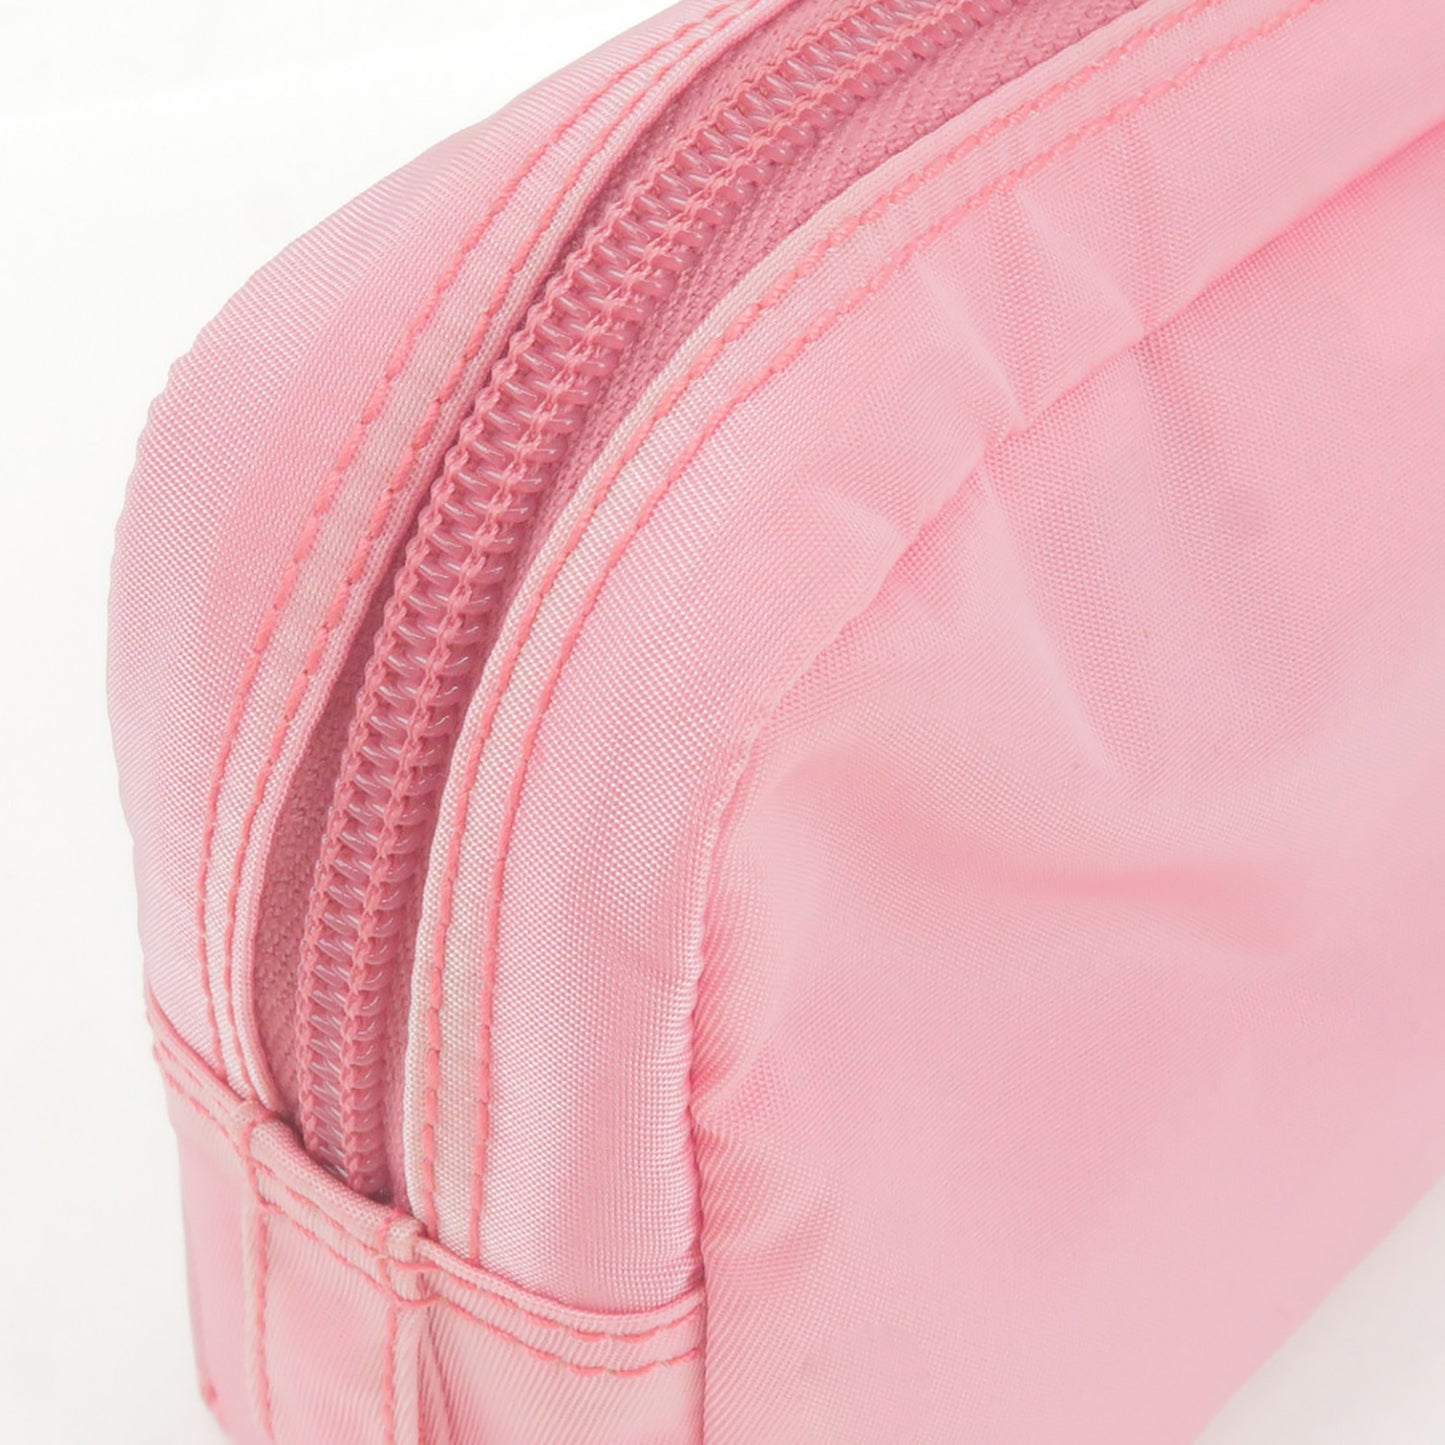 PRADA Logo Nylon Leather Pouch Clutch Bag Pink MV340